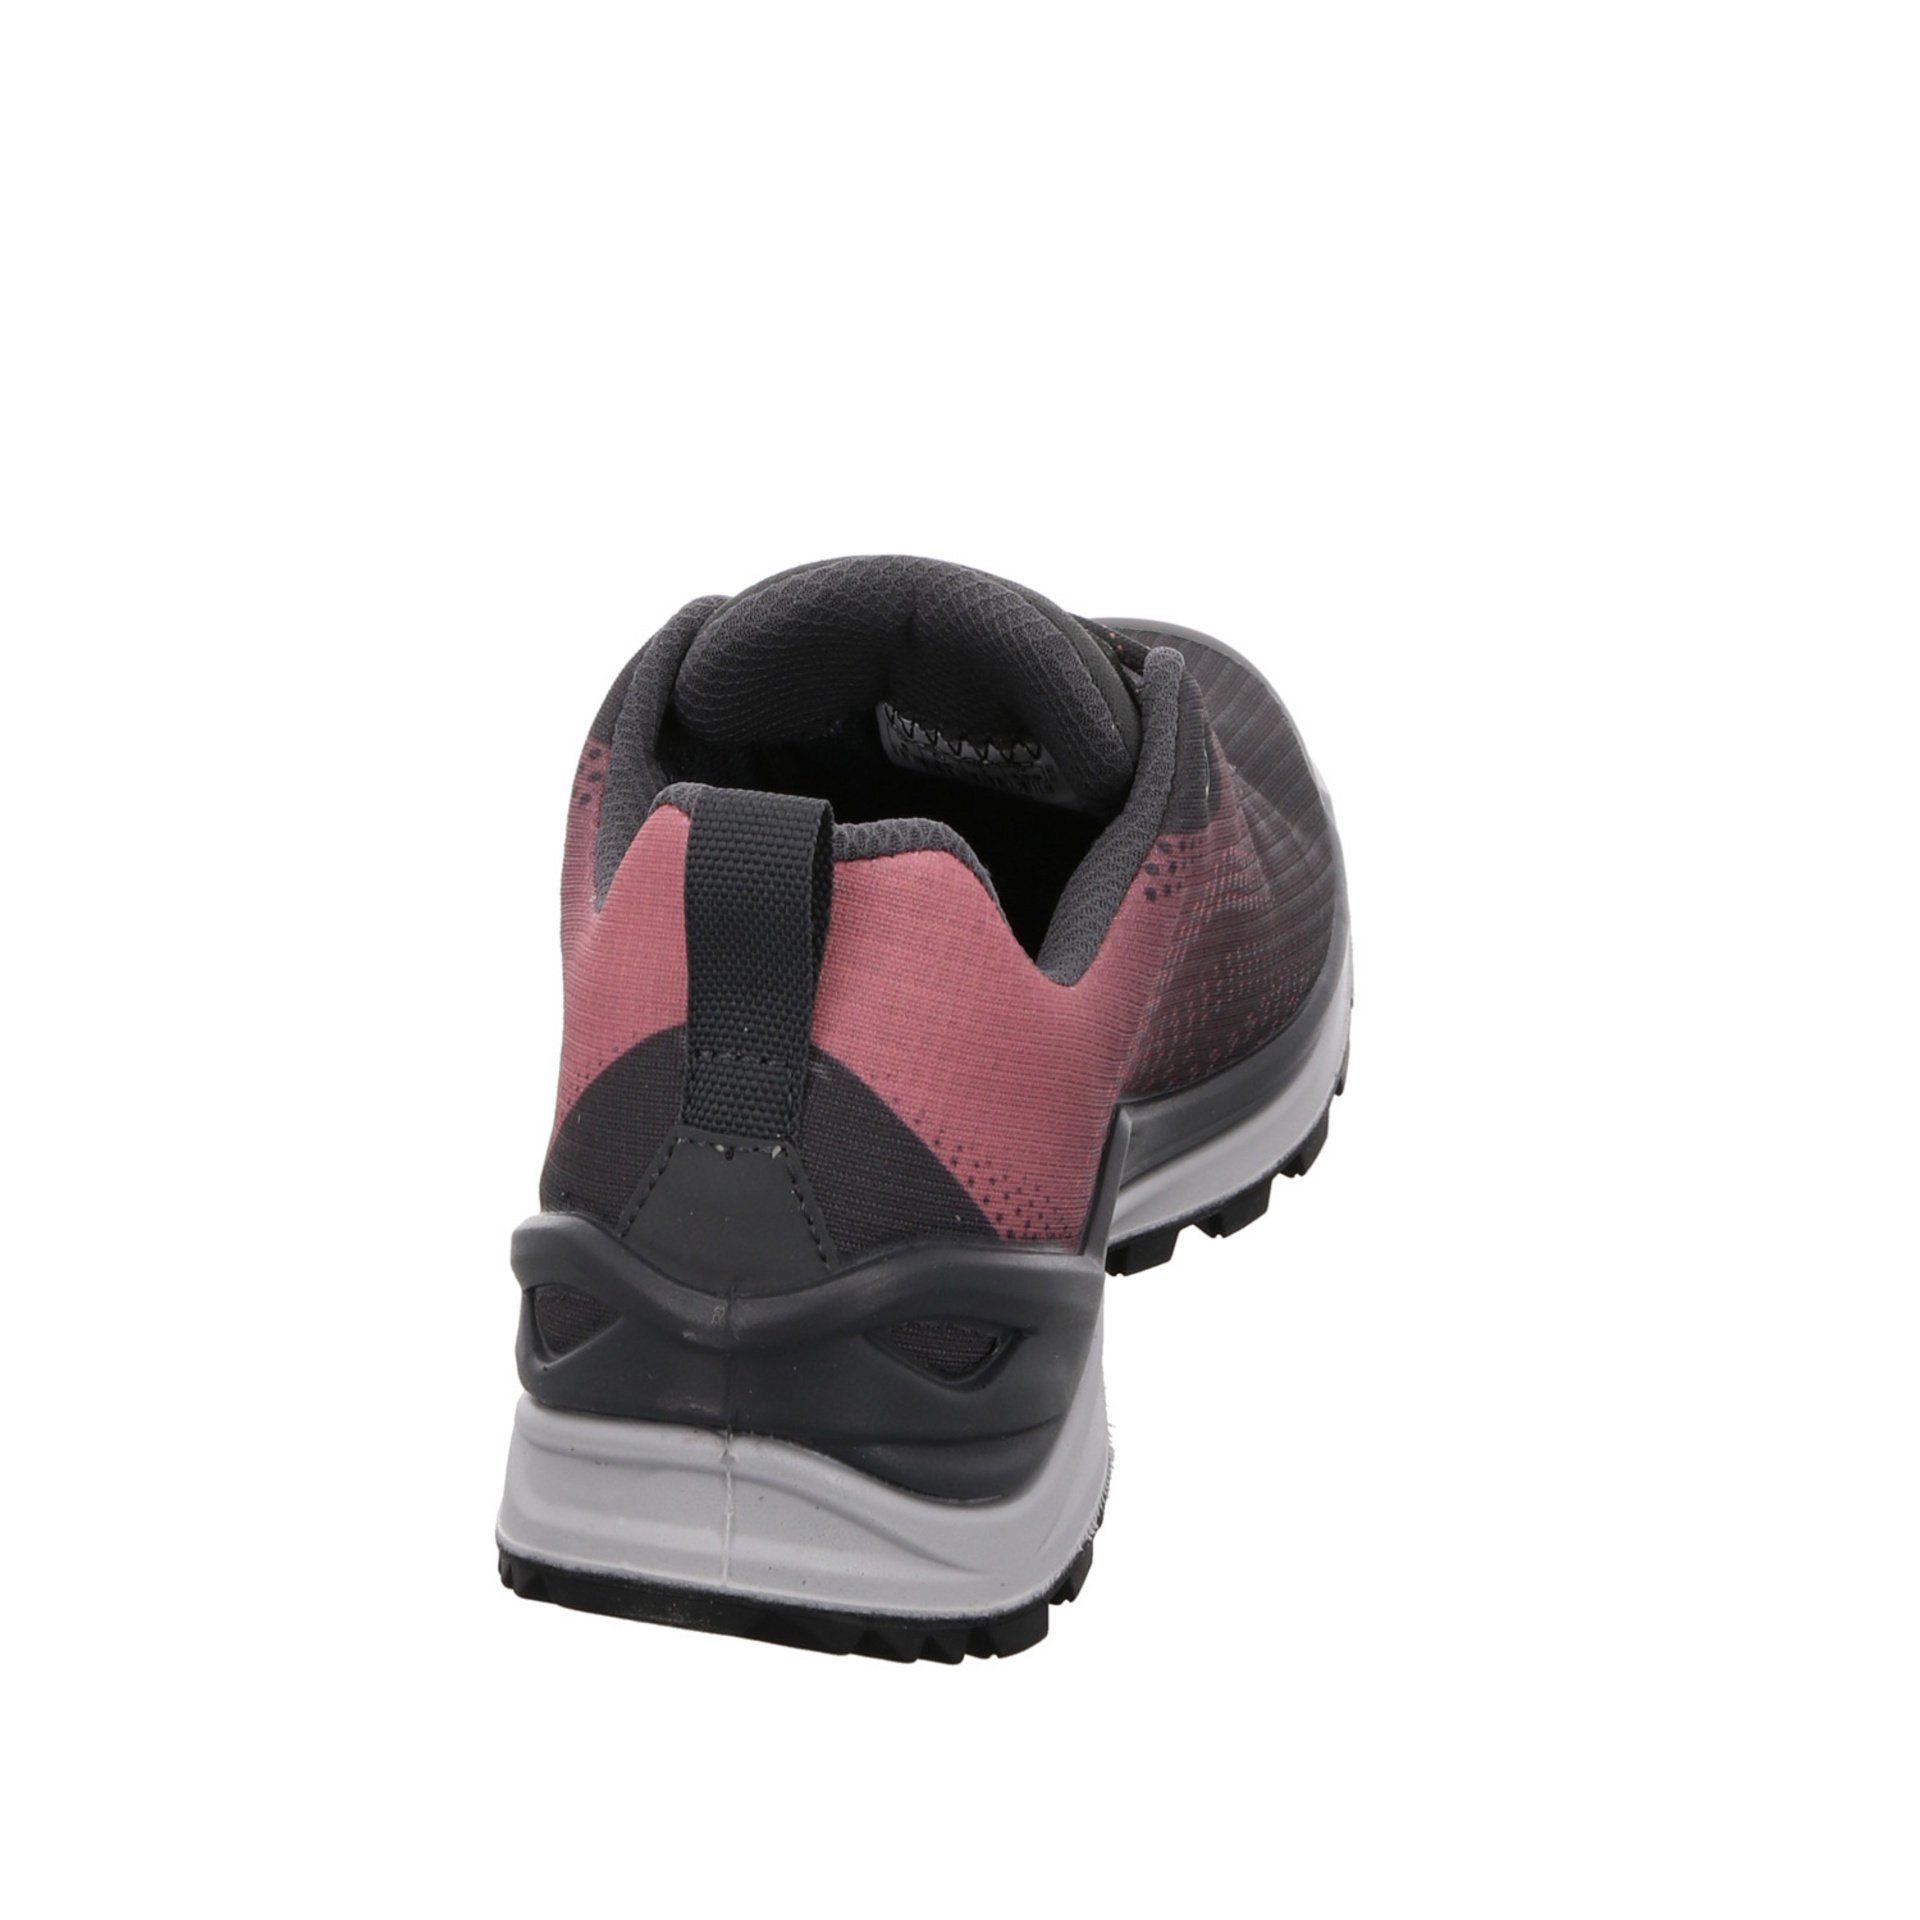 GTX anthrazit (201) Schuhe Outdoorschuh Outdoorschuh Outdoor Lo Zirrox Synthetikkombination Lowa Damen